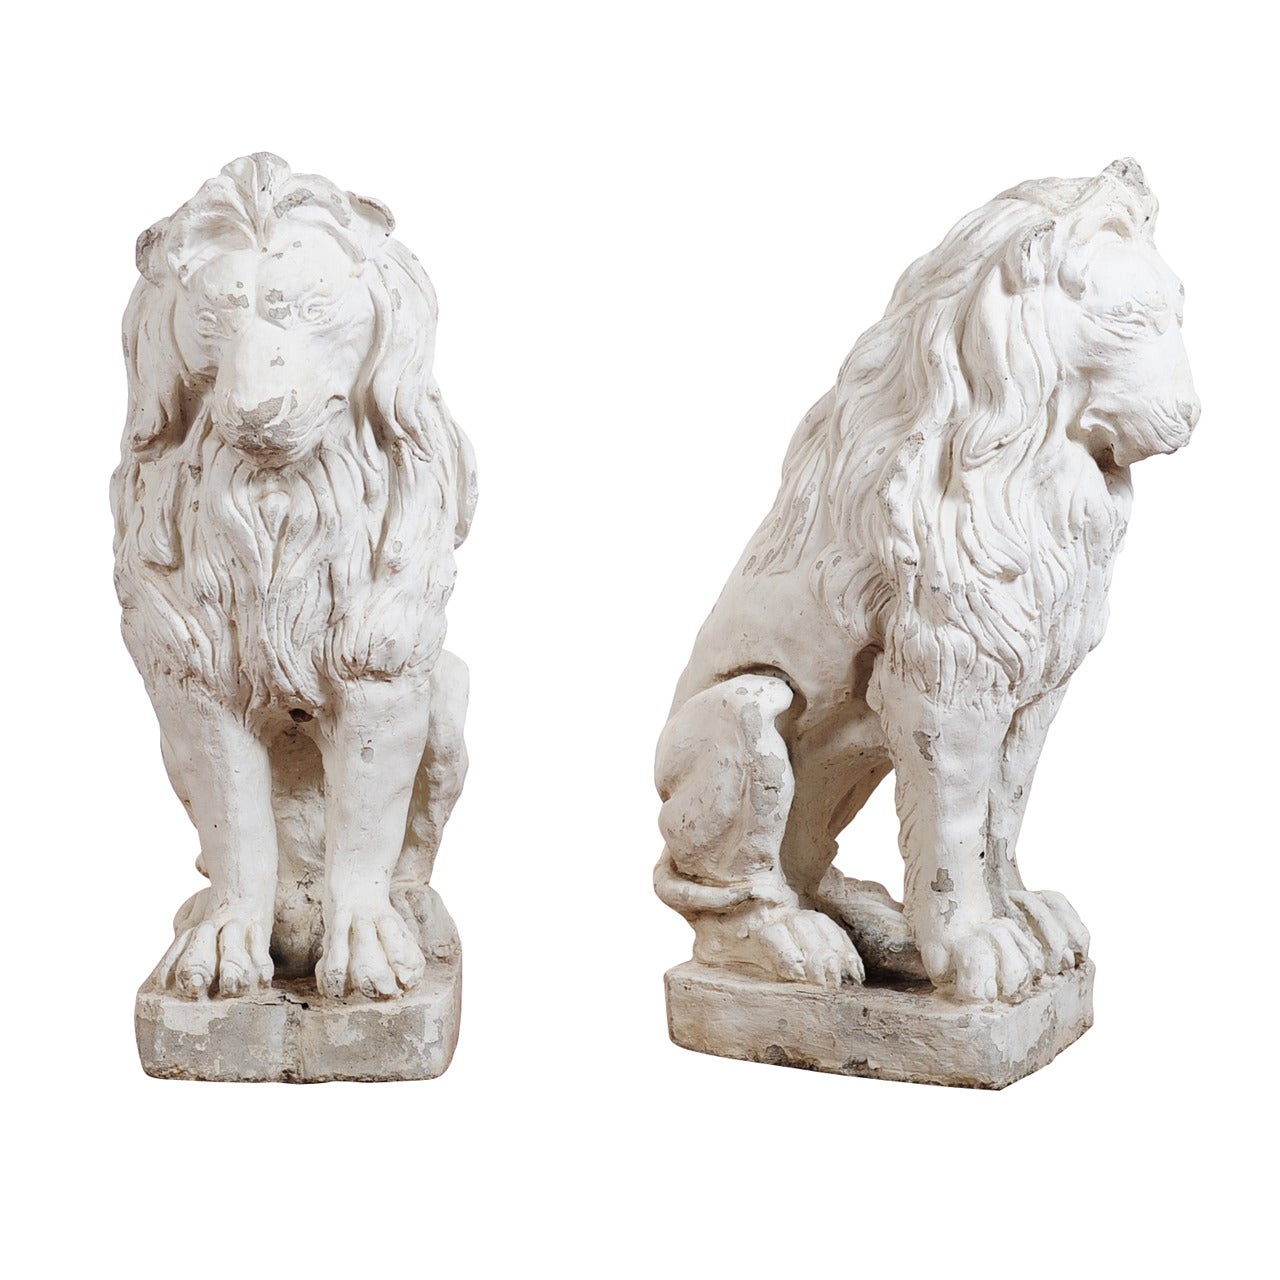 A Pair of 19th Century Italian Baroque Outdoor Concrete Lion Sculptures